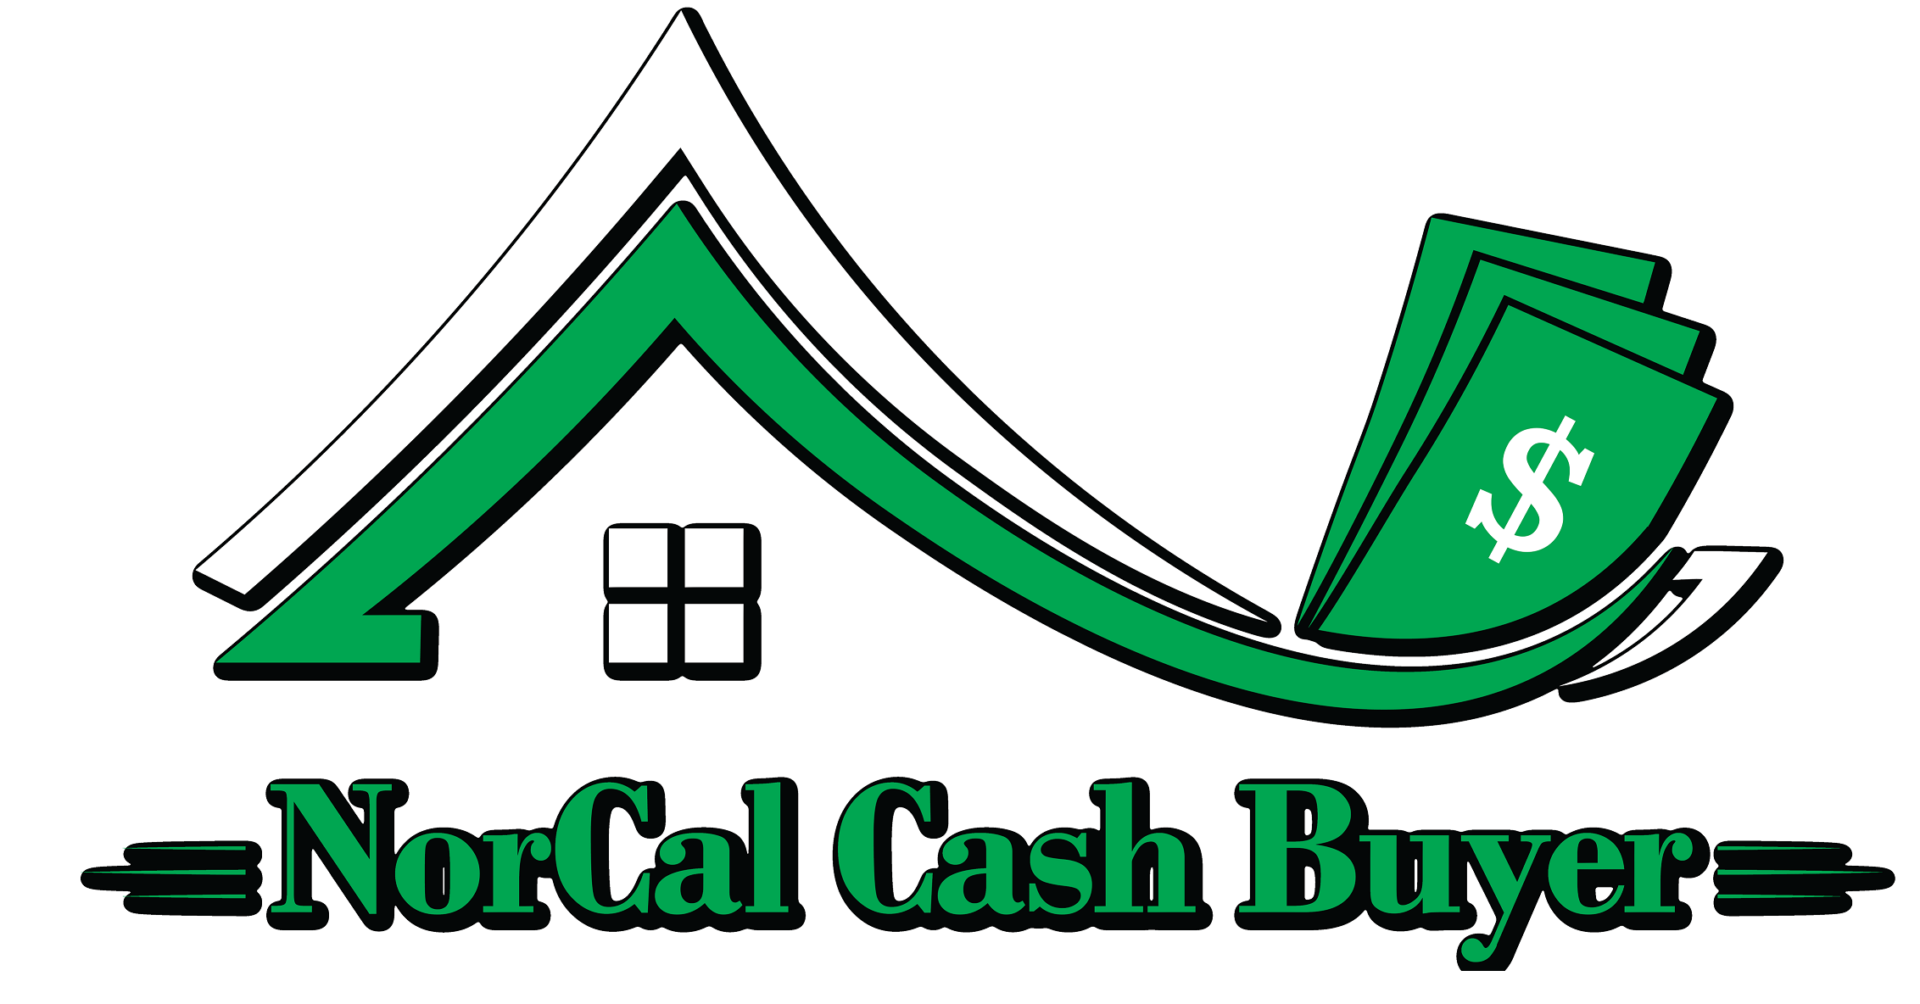 NorCal Cash Buyer logo